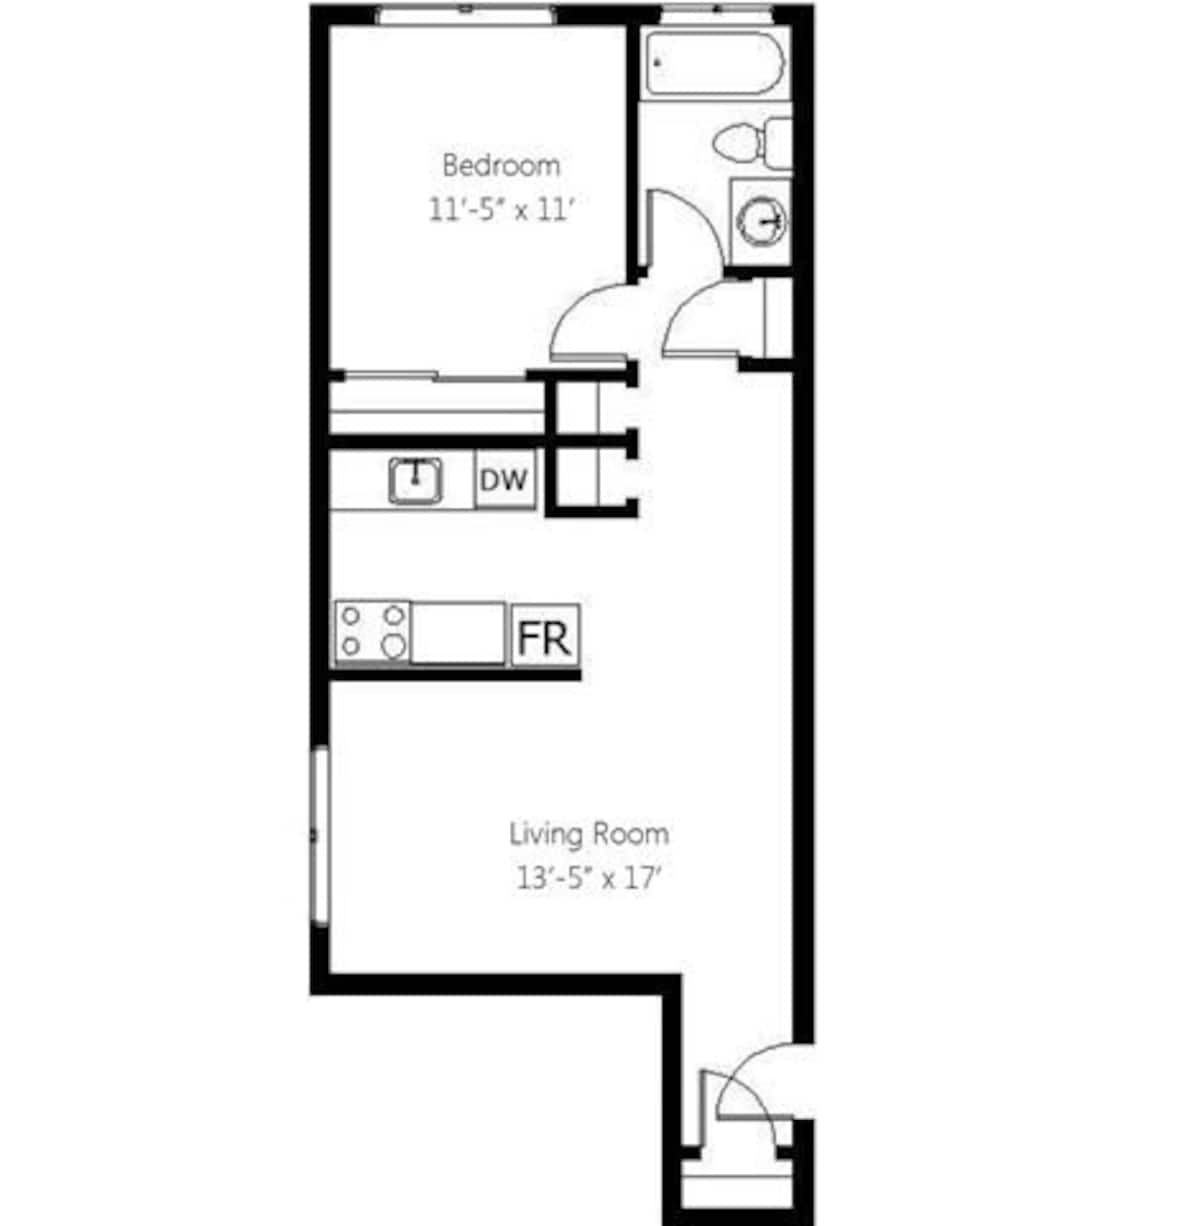 Floorplan diagram for Bristol, showing 1 bedroom